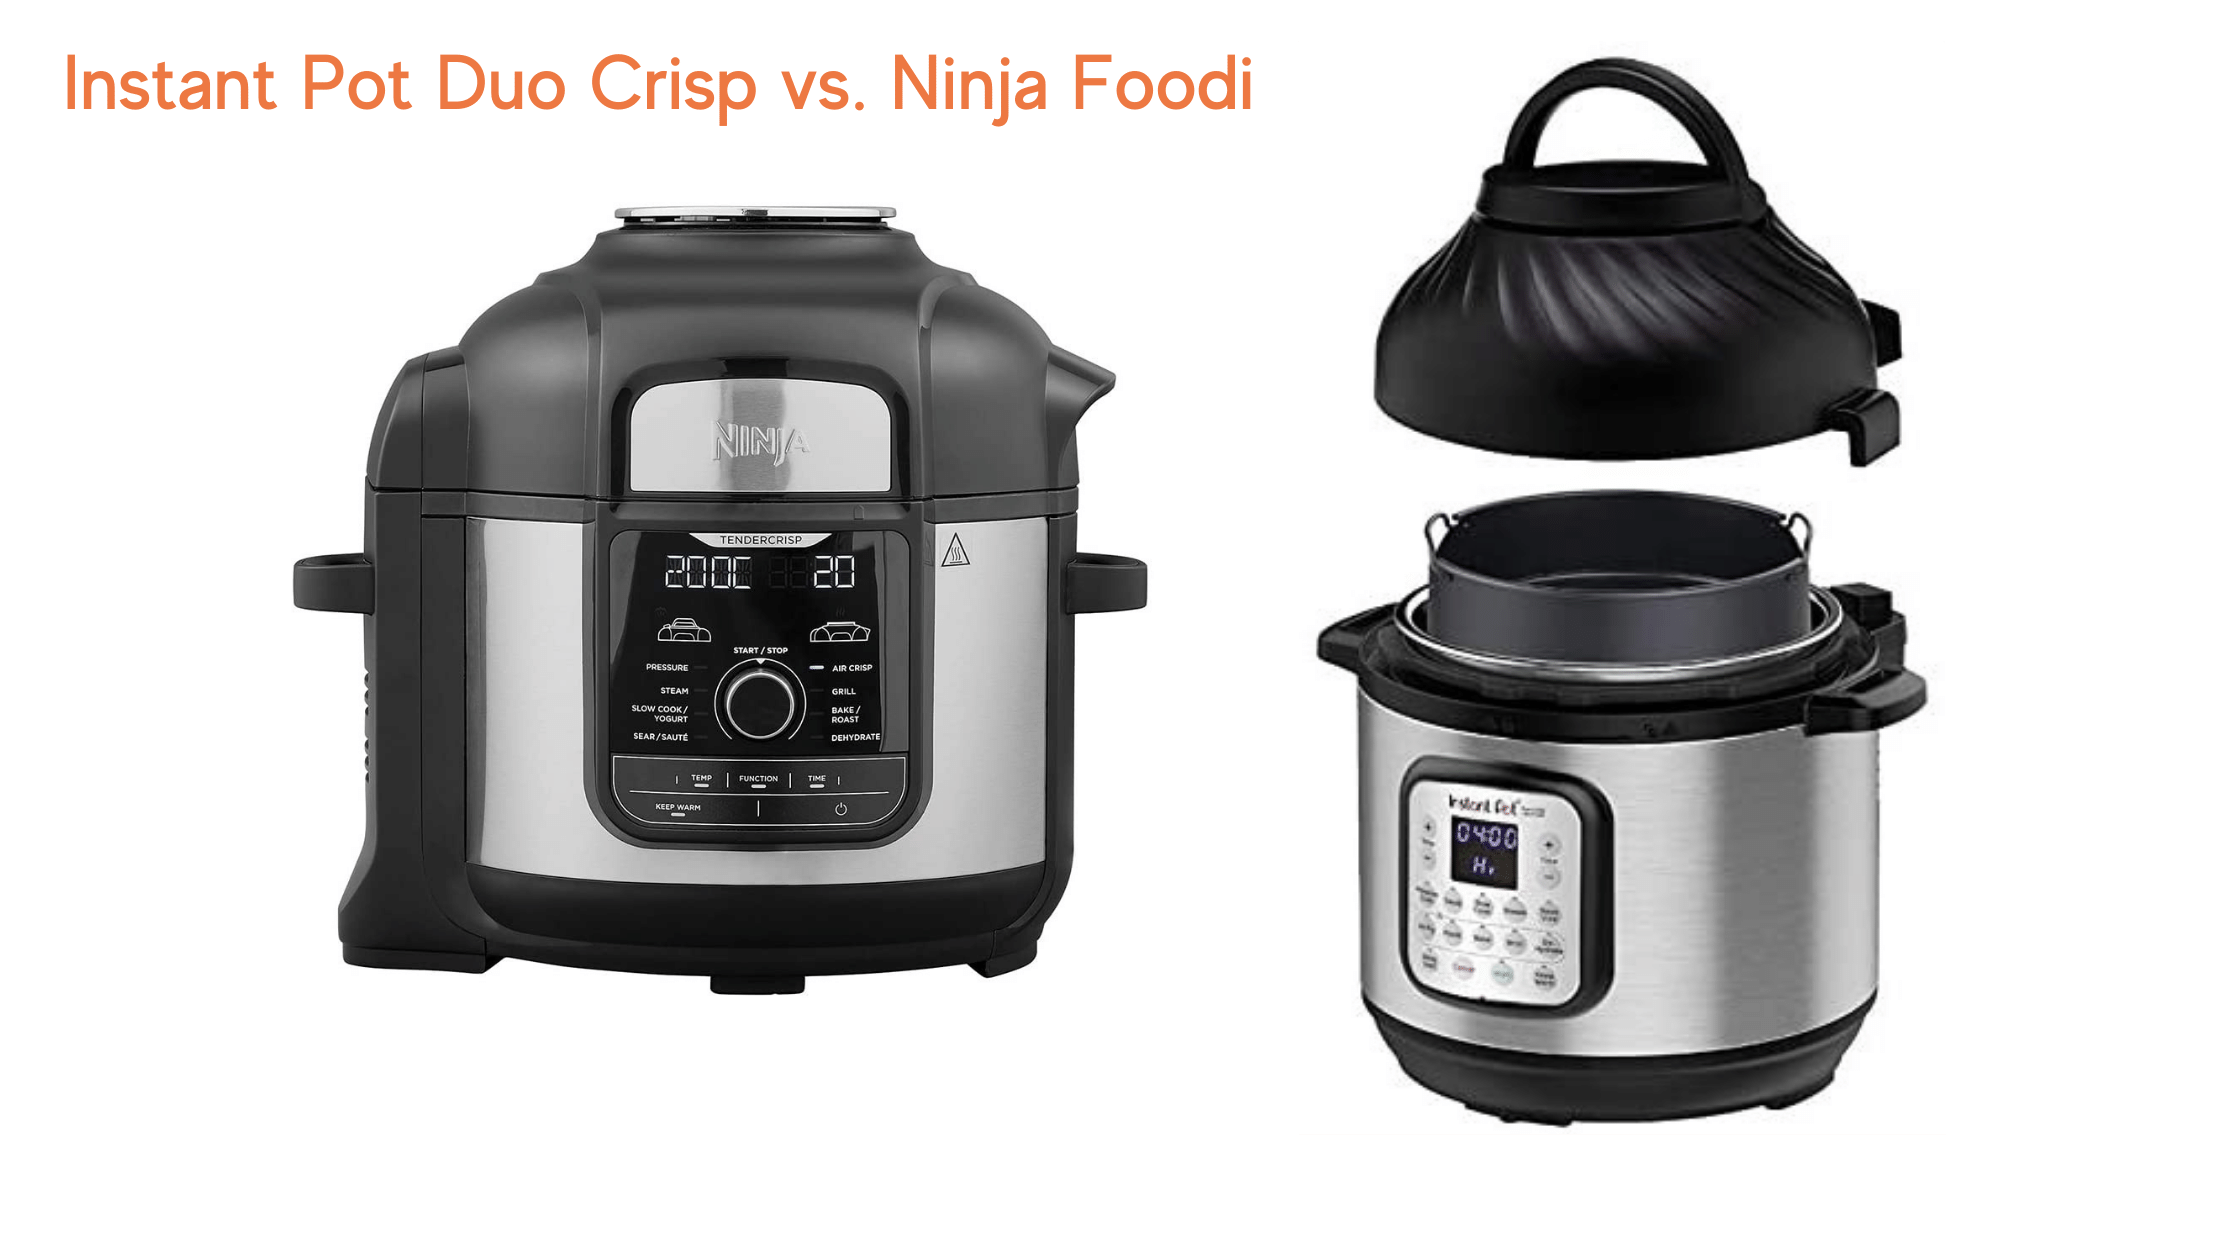 Instant Pot pro crisp vs Ninja foodi max: Which multi-cooker is